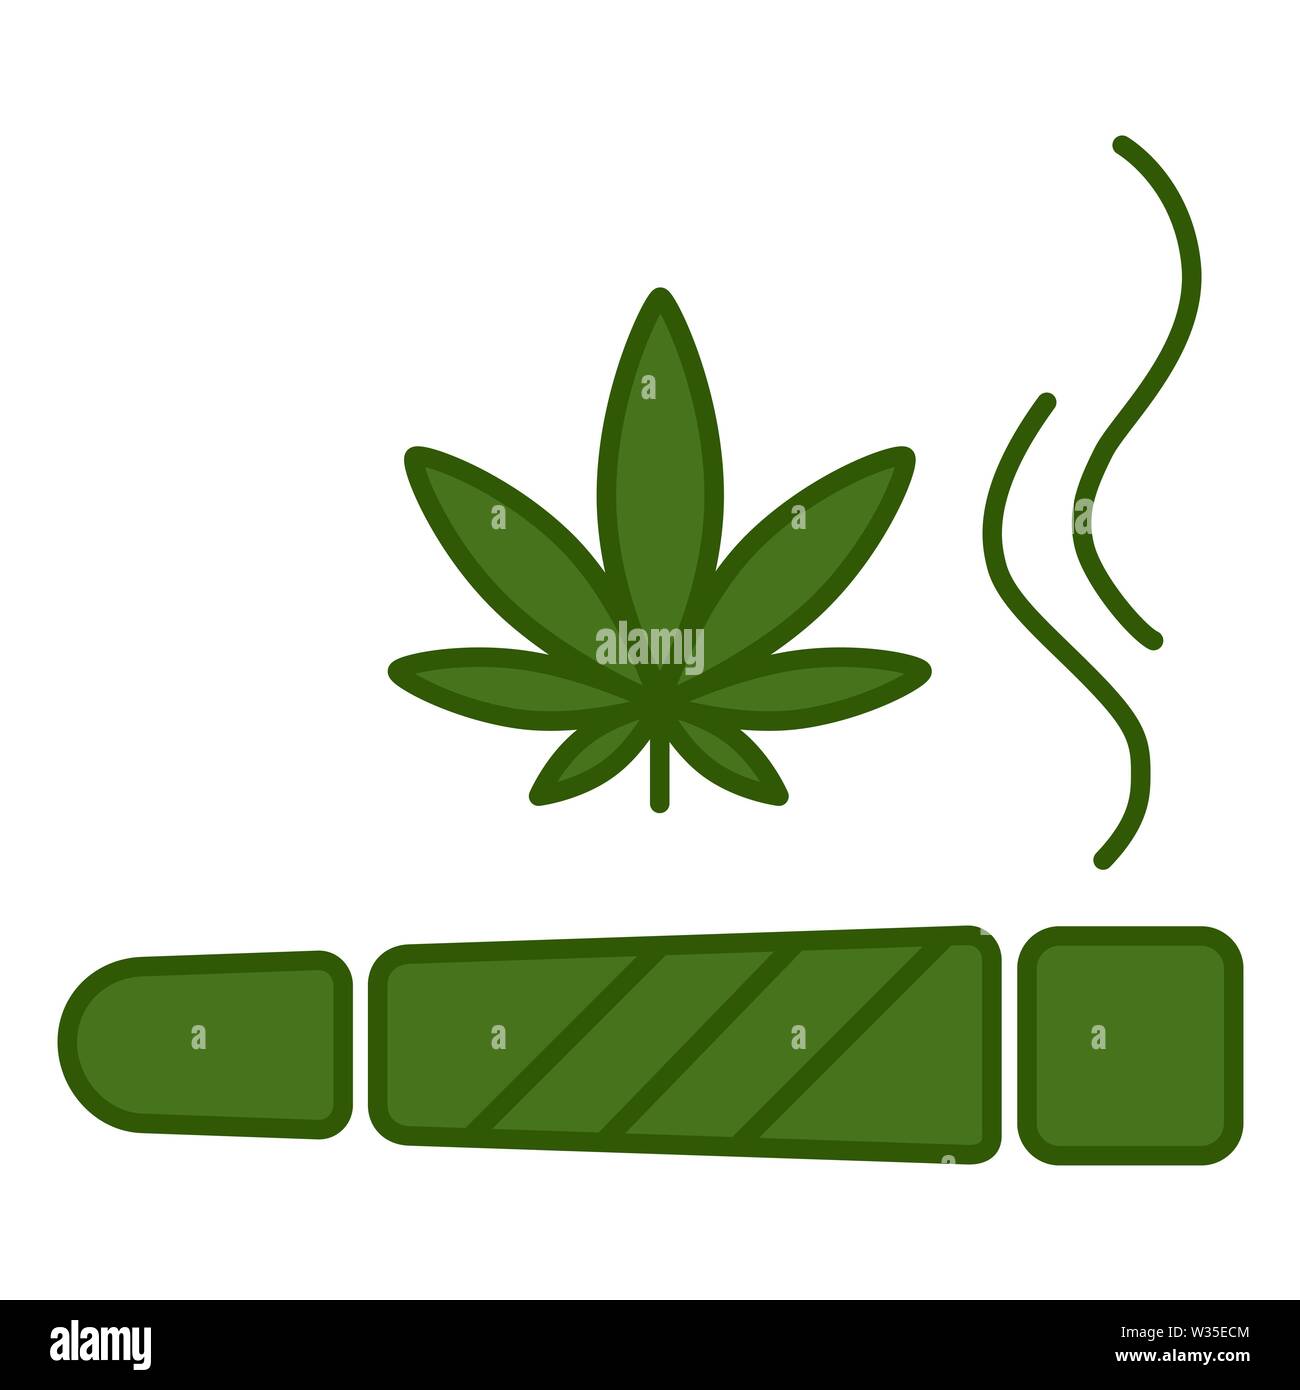 Marijuana joint icon. Isolated vector illustration on white background. Stock Vector